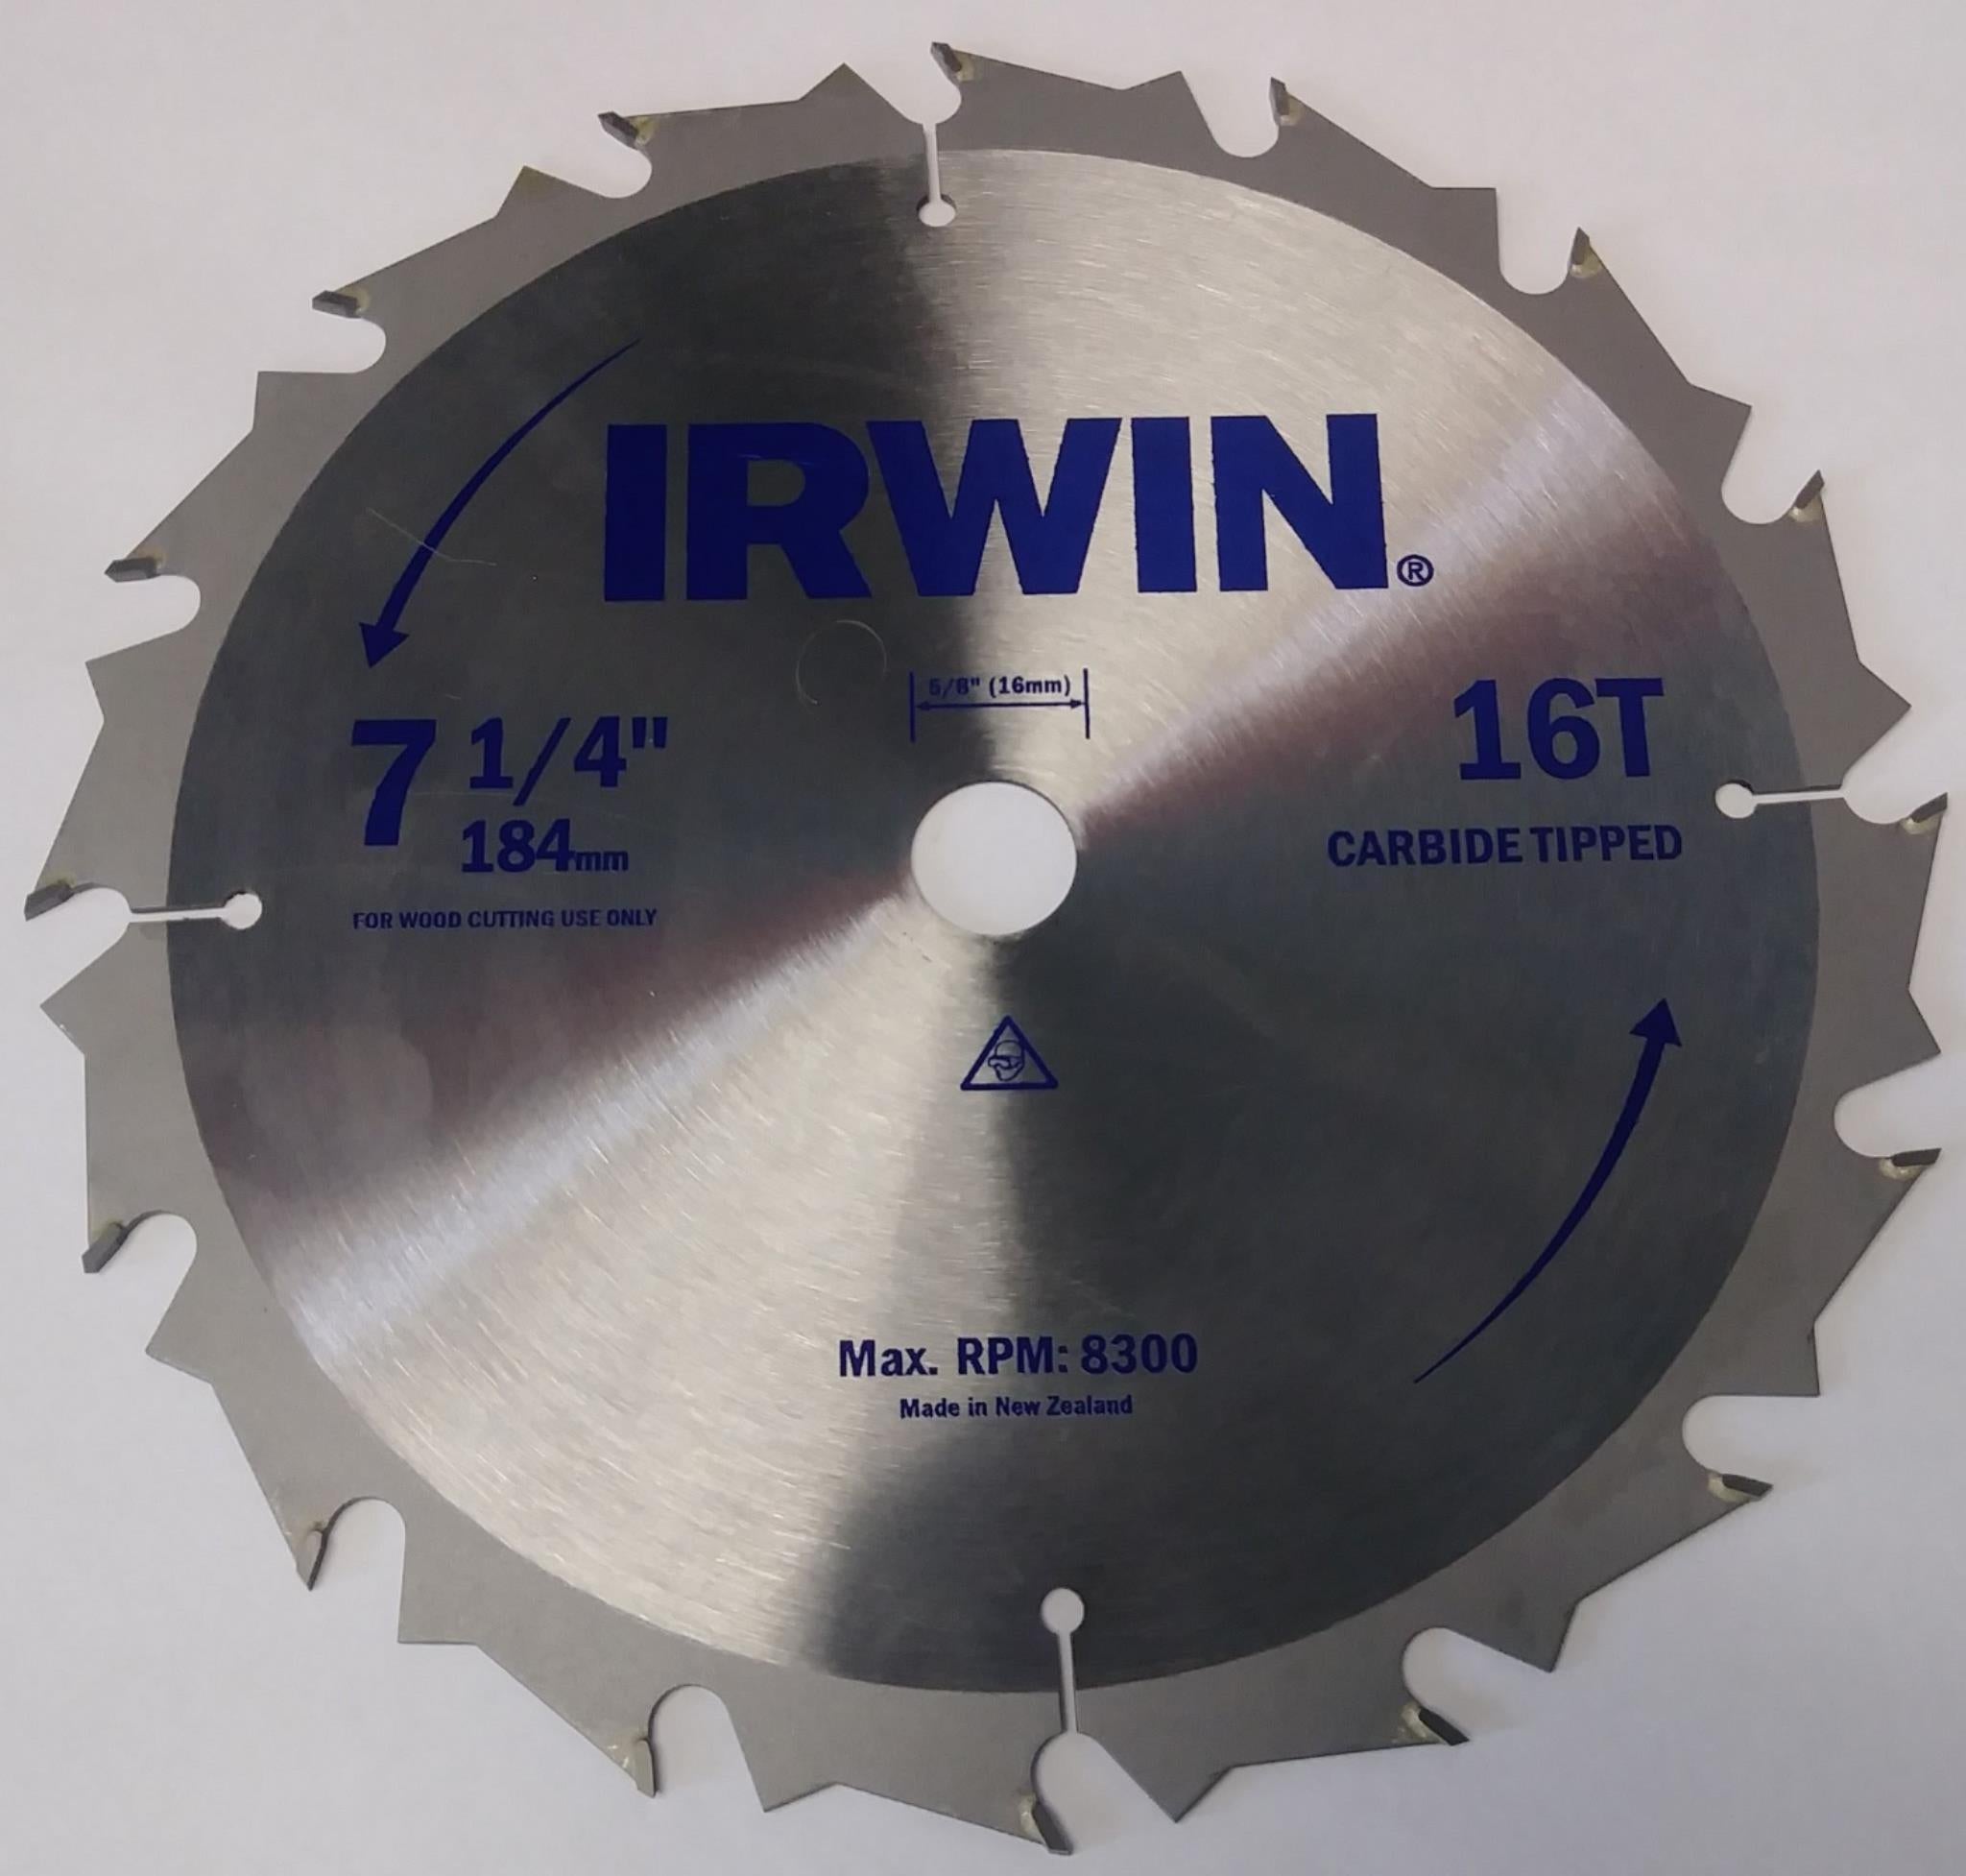 Irwin 7-1/4" x 16T Carbide Tipped Circular Saw Blade New Zealand